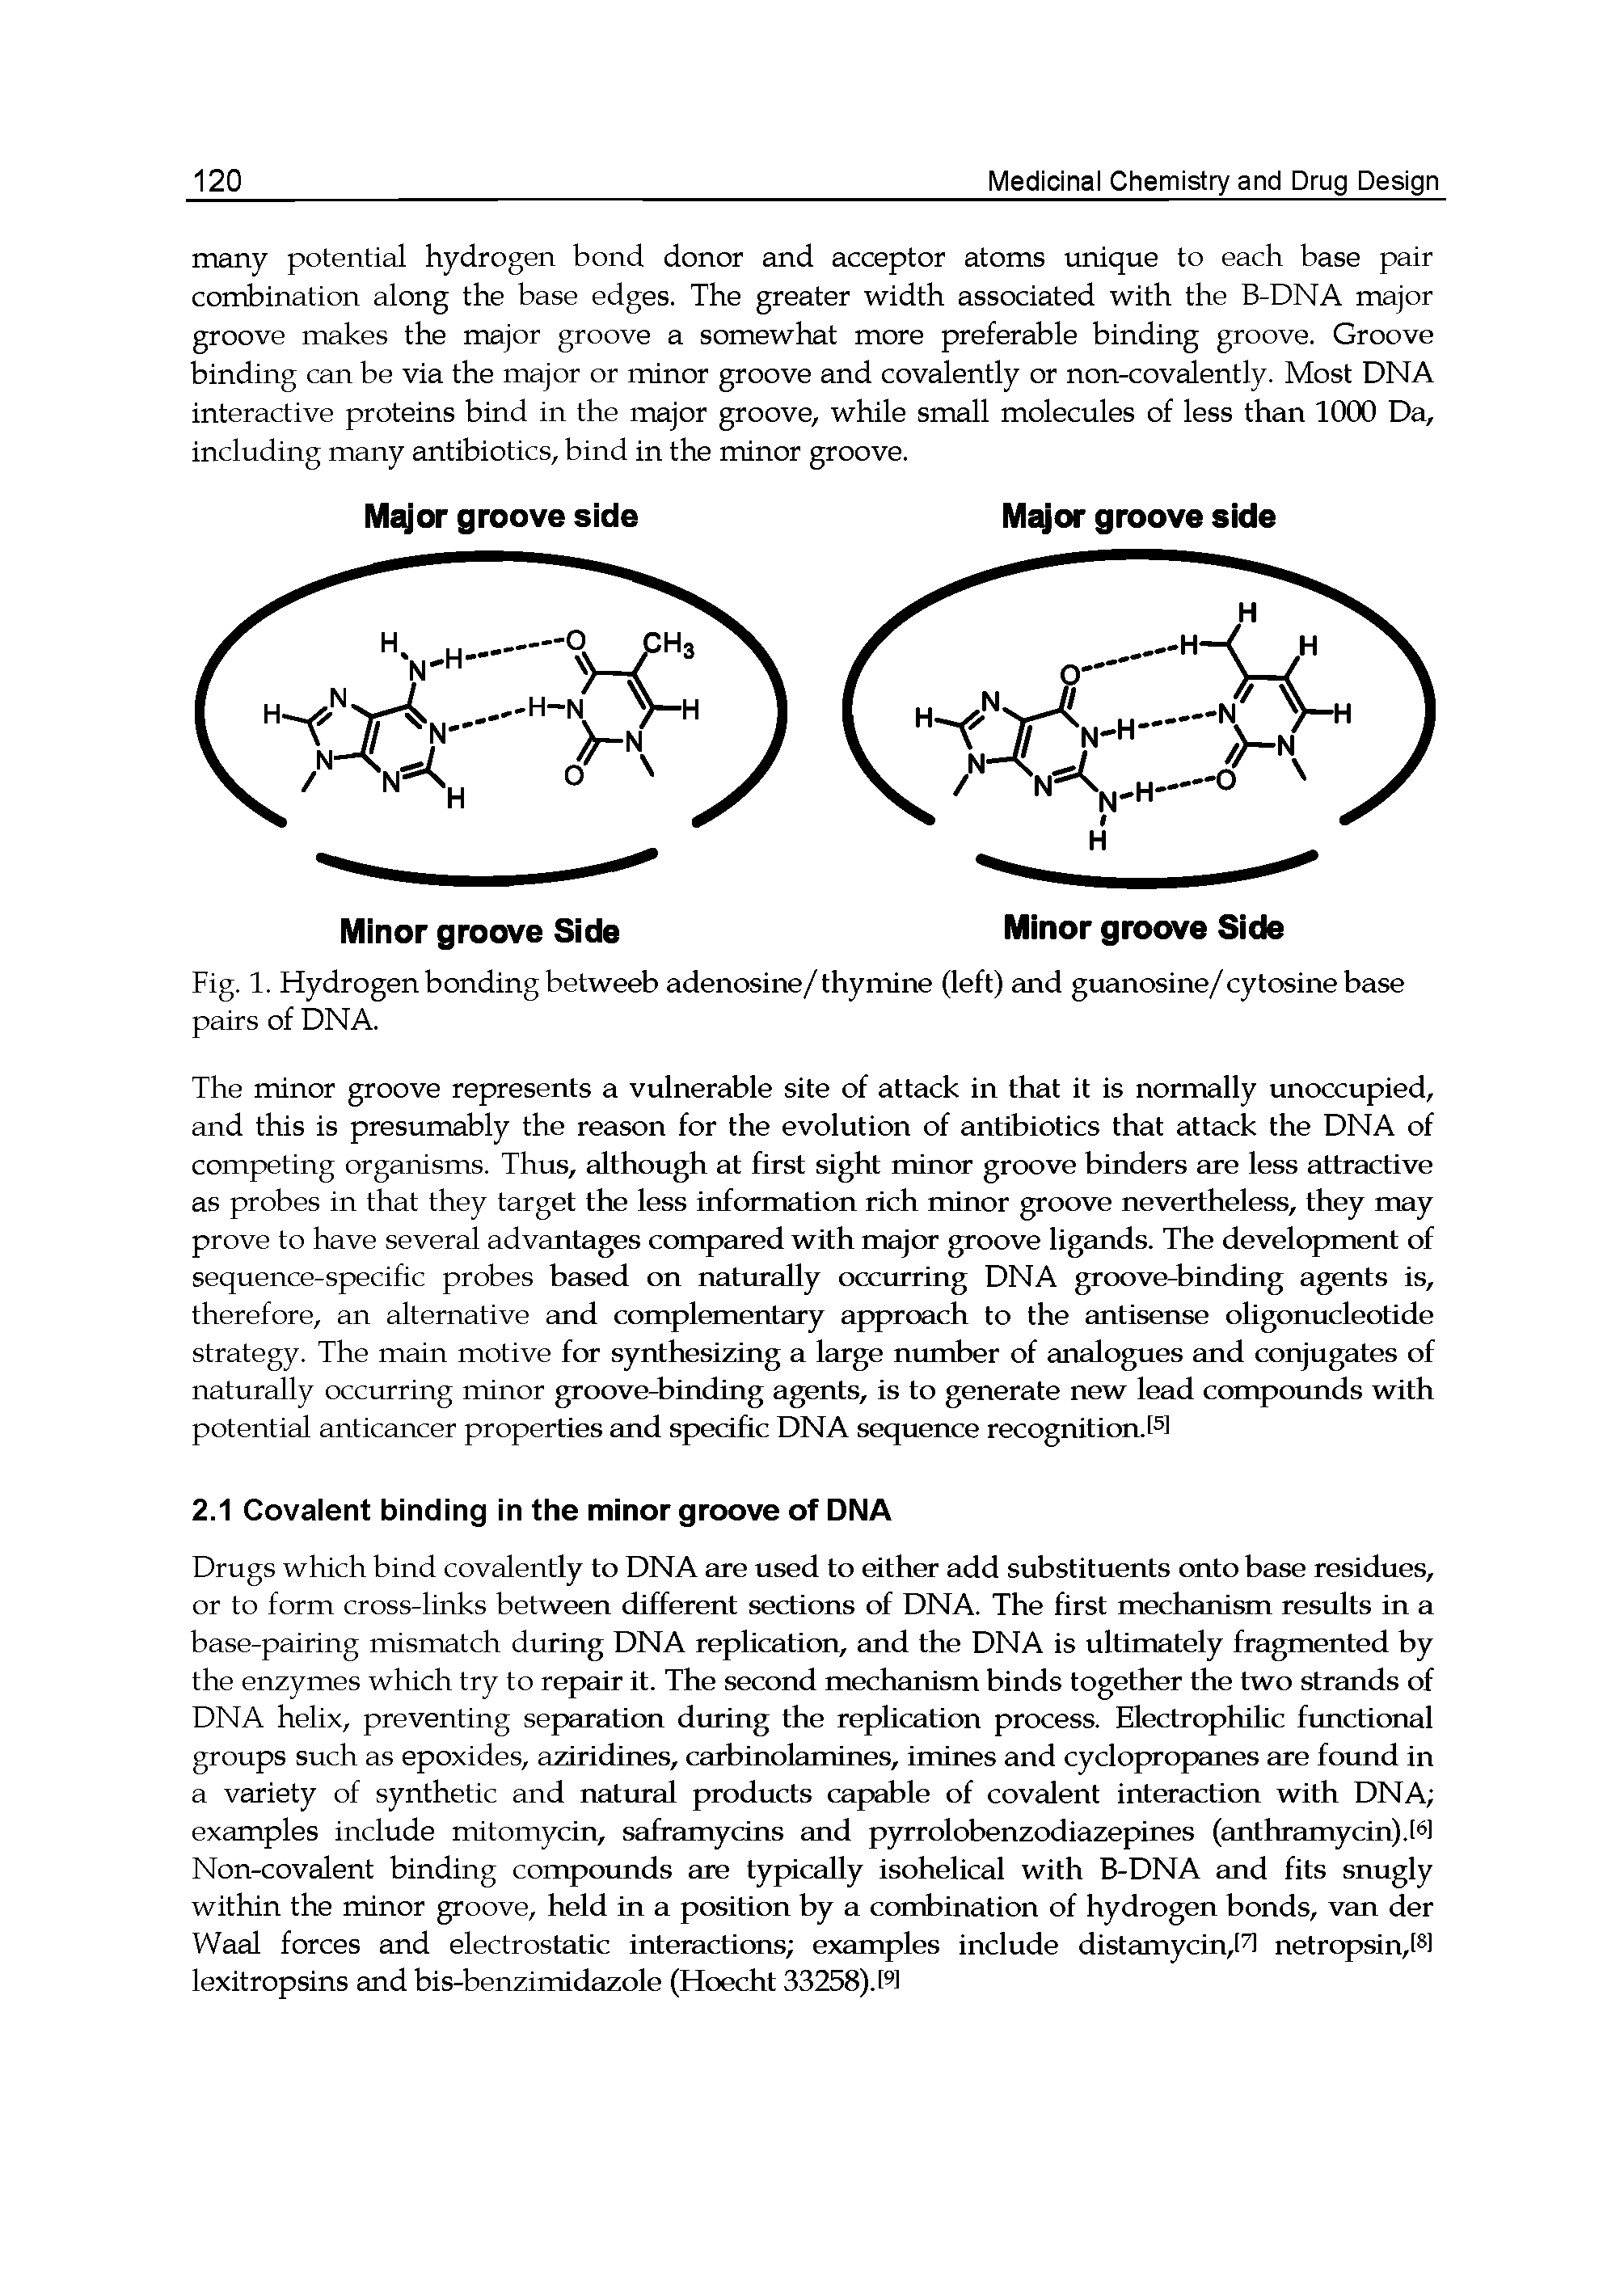 Fig. 1. Hydrogen bonding betweeb adenosine/thymine Oeft) and guanosine/cytosine base pairs of DNA.